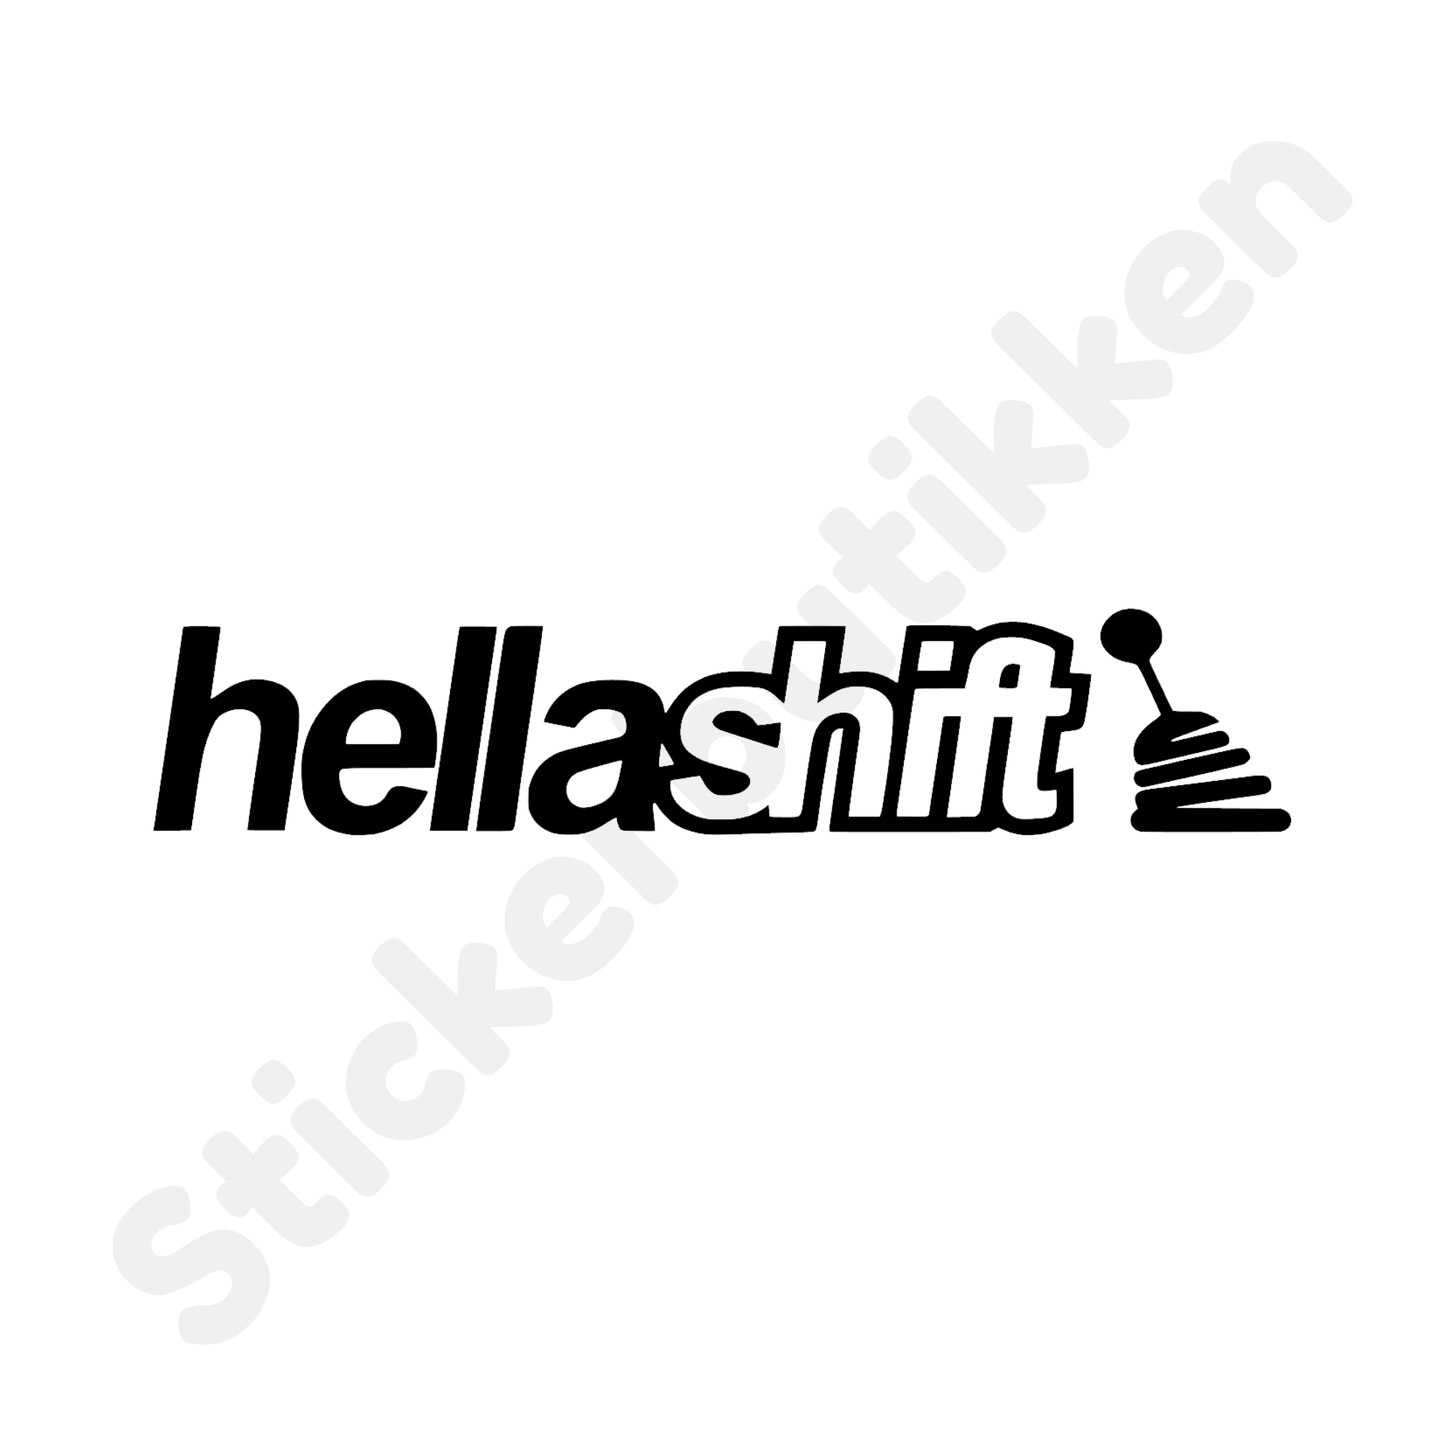 Hellashift